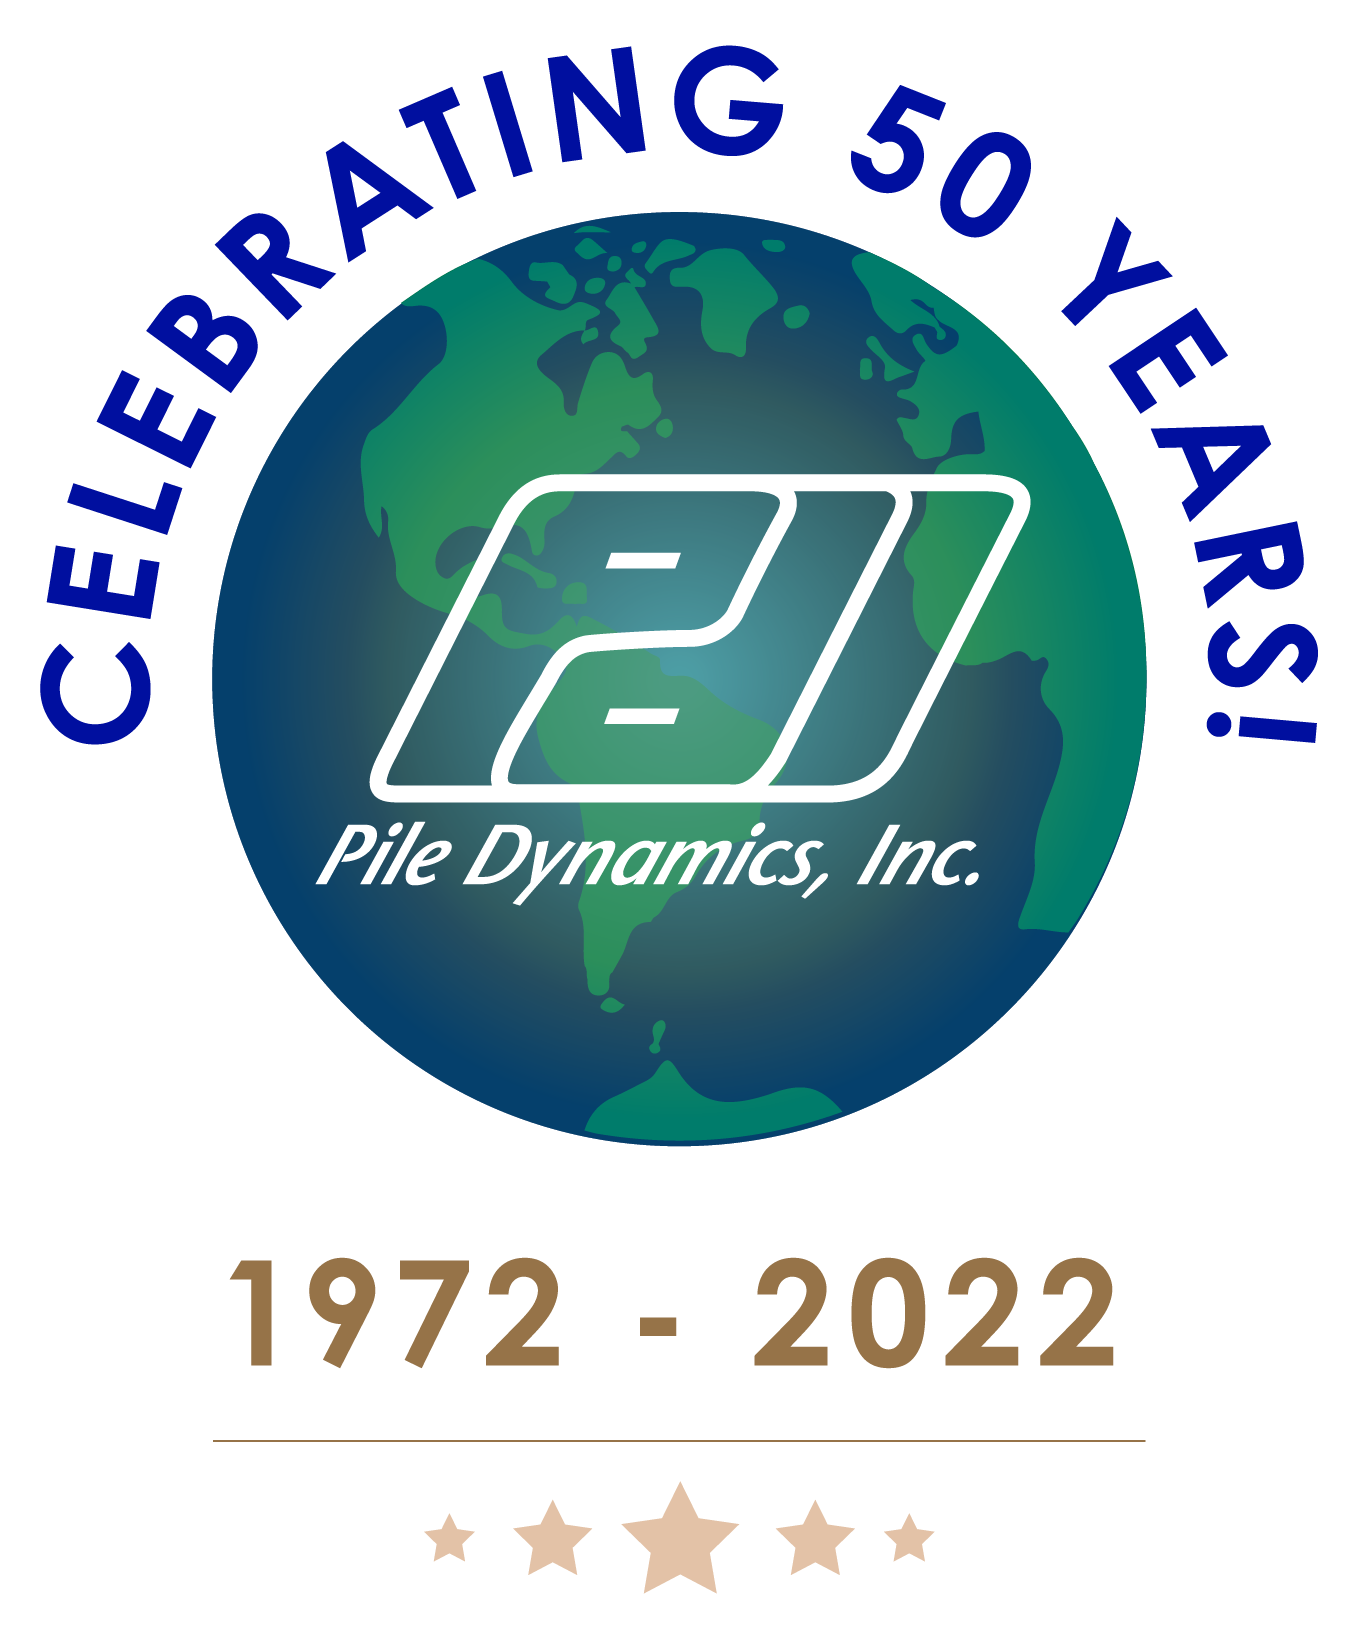 Pile Dynamics, Inc. logo